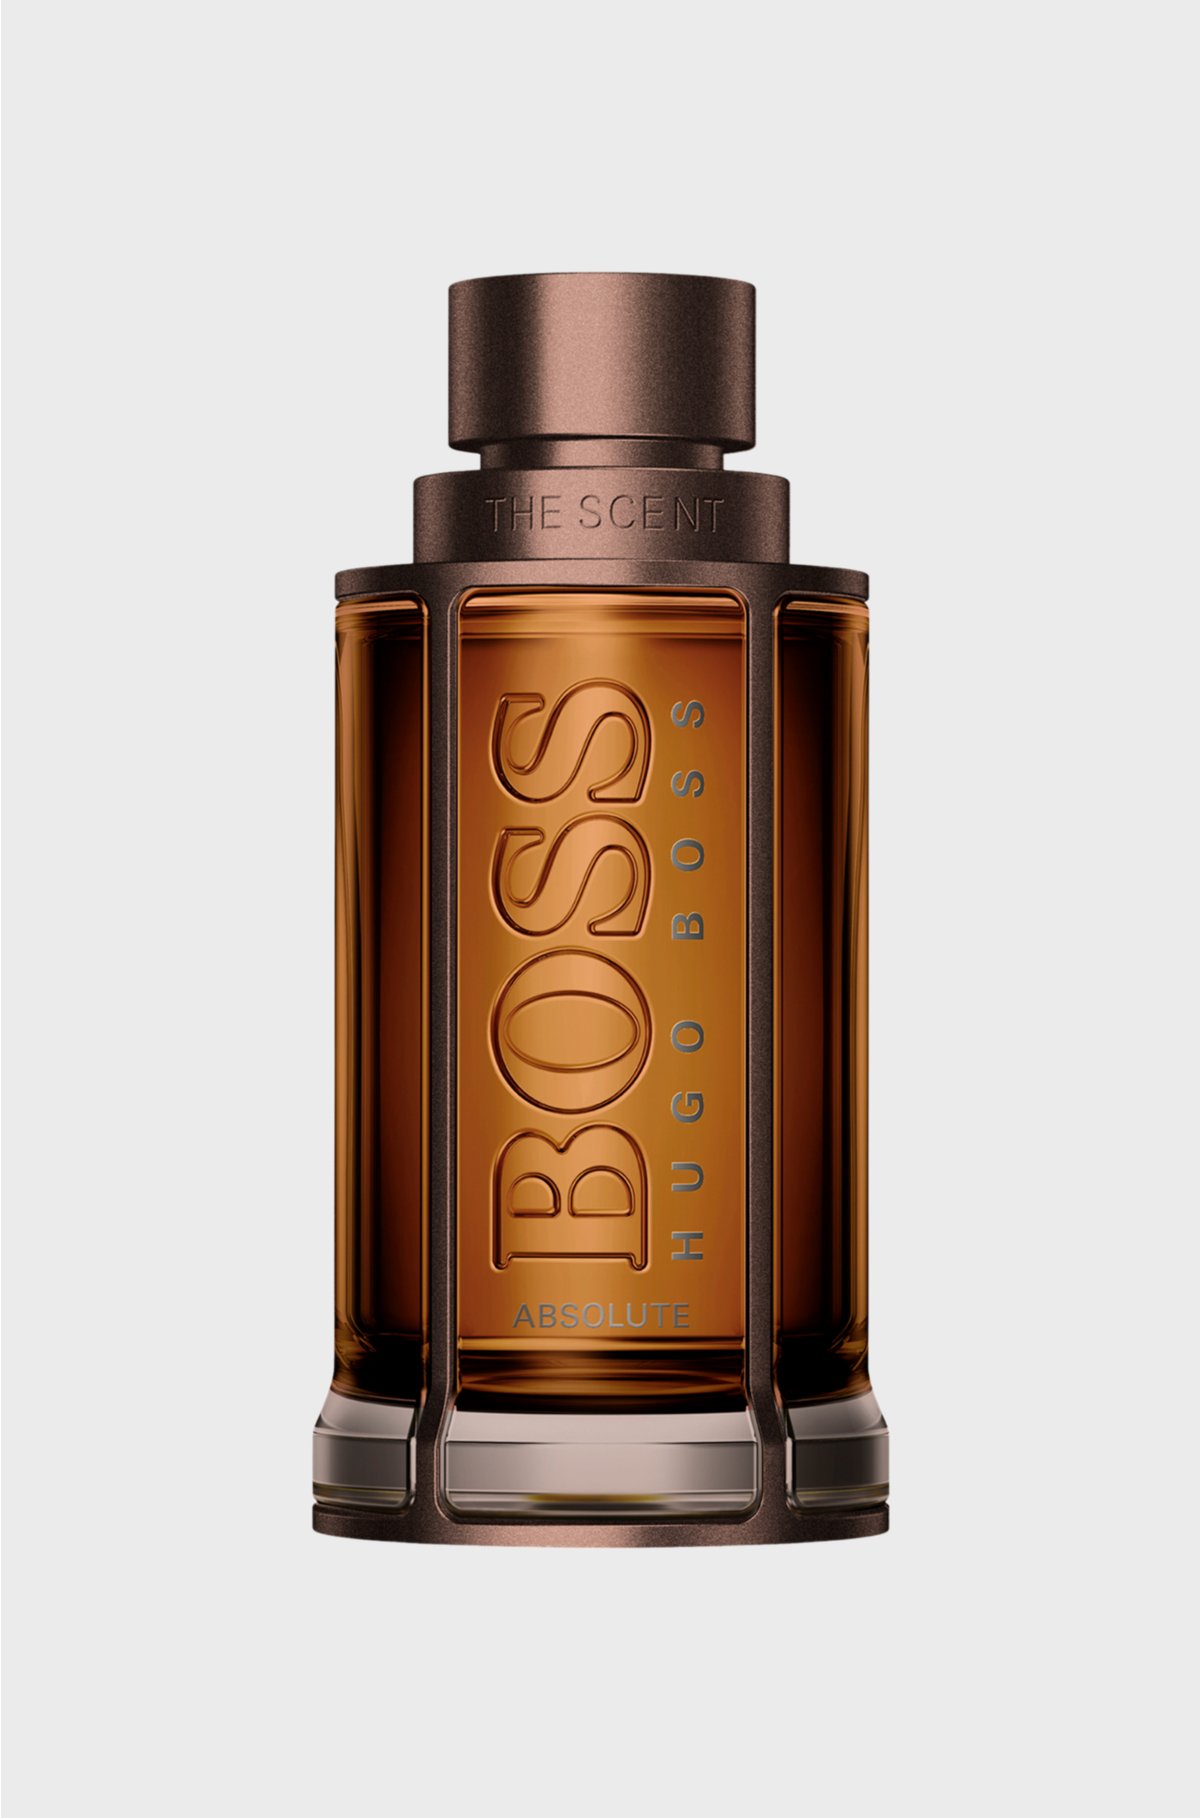 BOSS The Scent Absolute For Him eau de parfum 50ml, Assorted-Pre-Pack